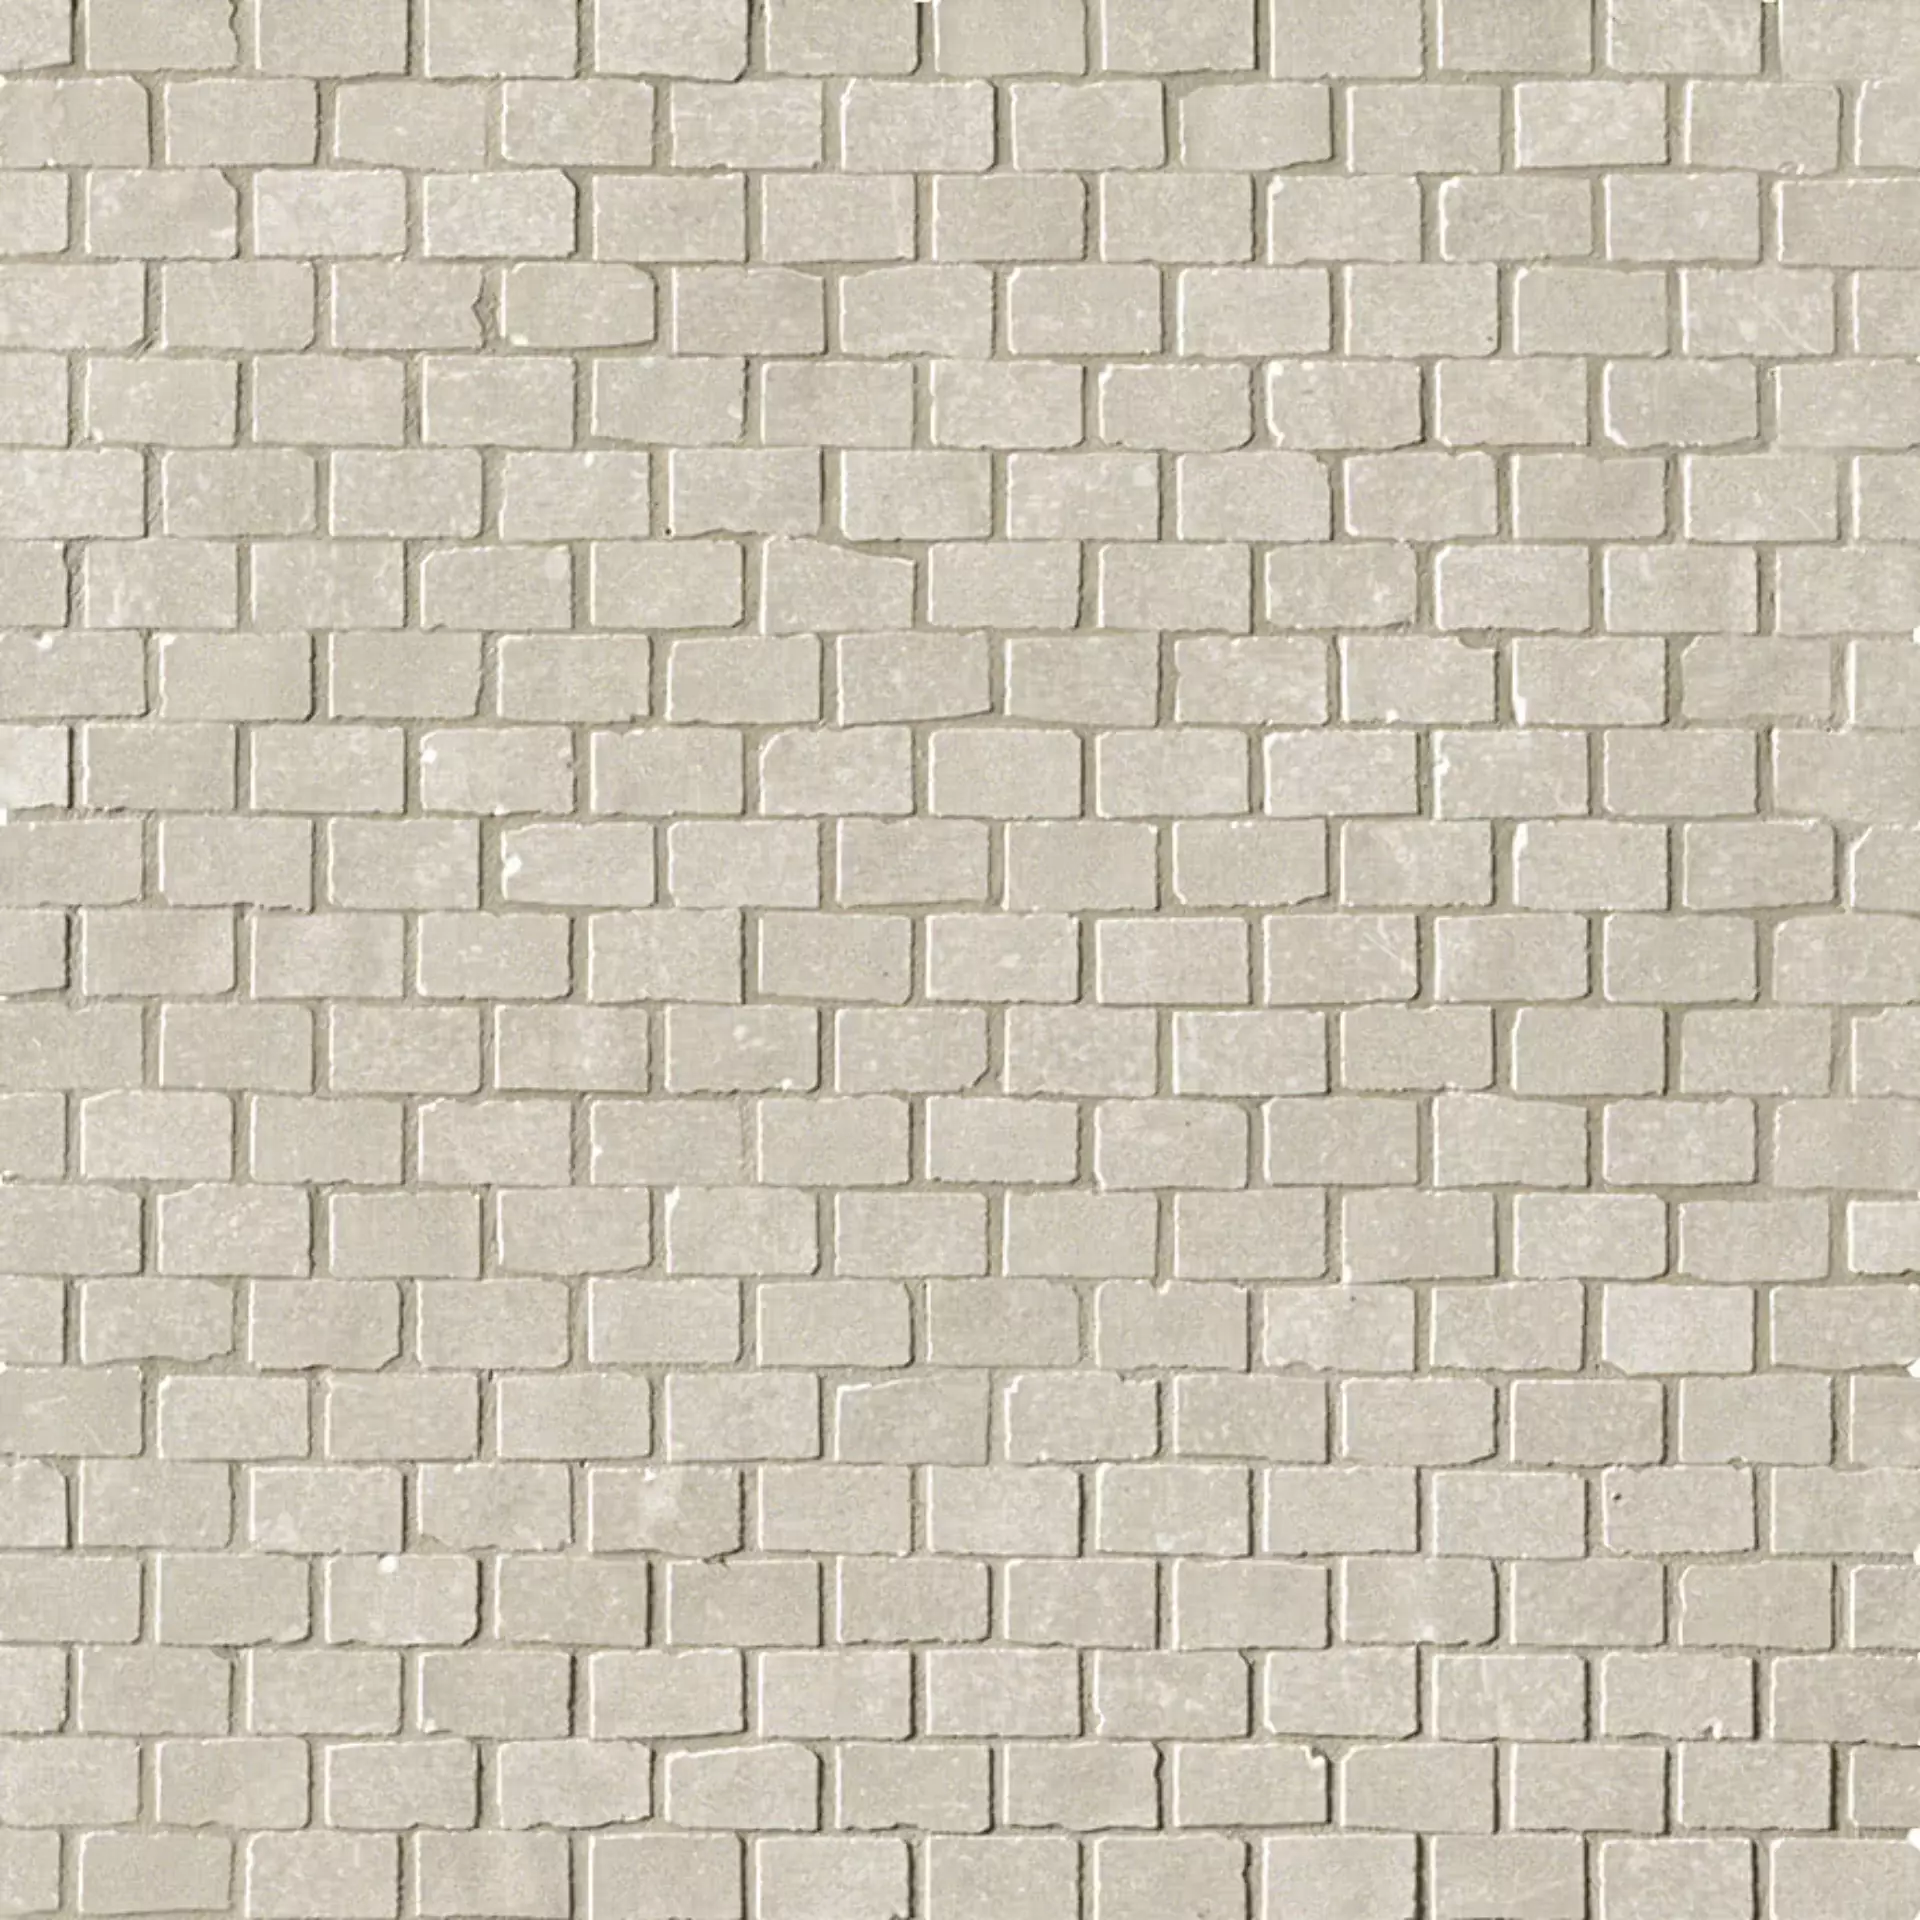 FAP Maku Grey Anticato Grey fMJ6 antiquiert 30,5x30,5cm Mosaik Brick